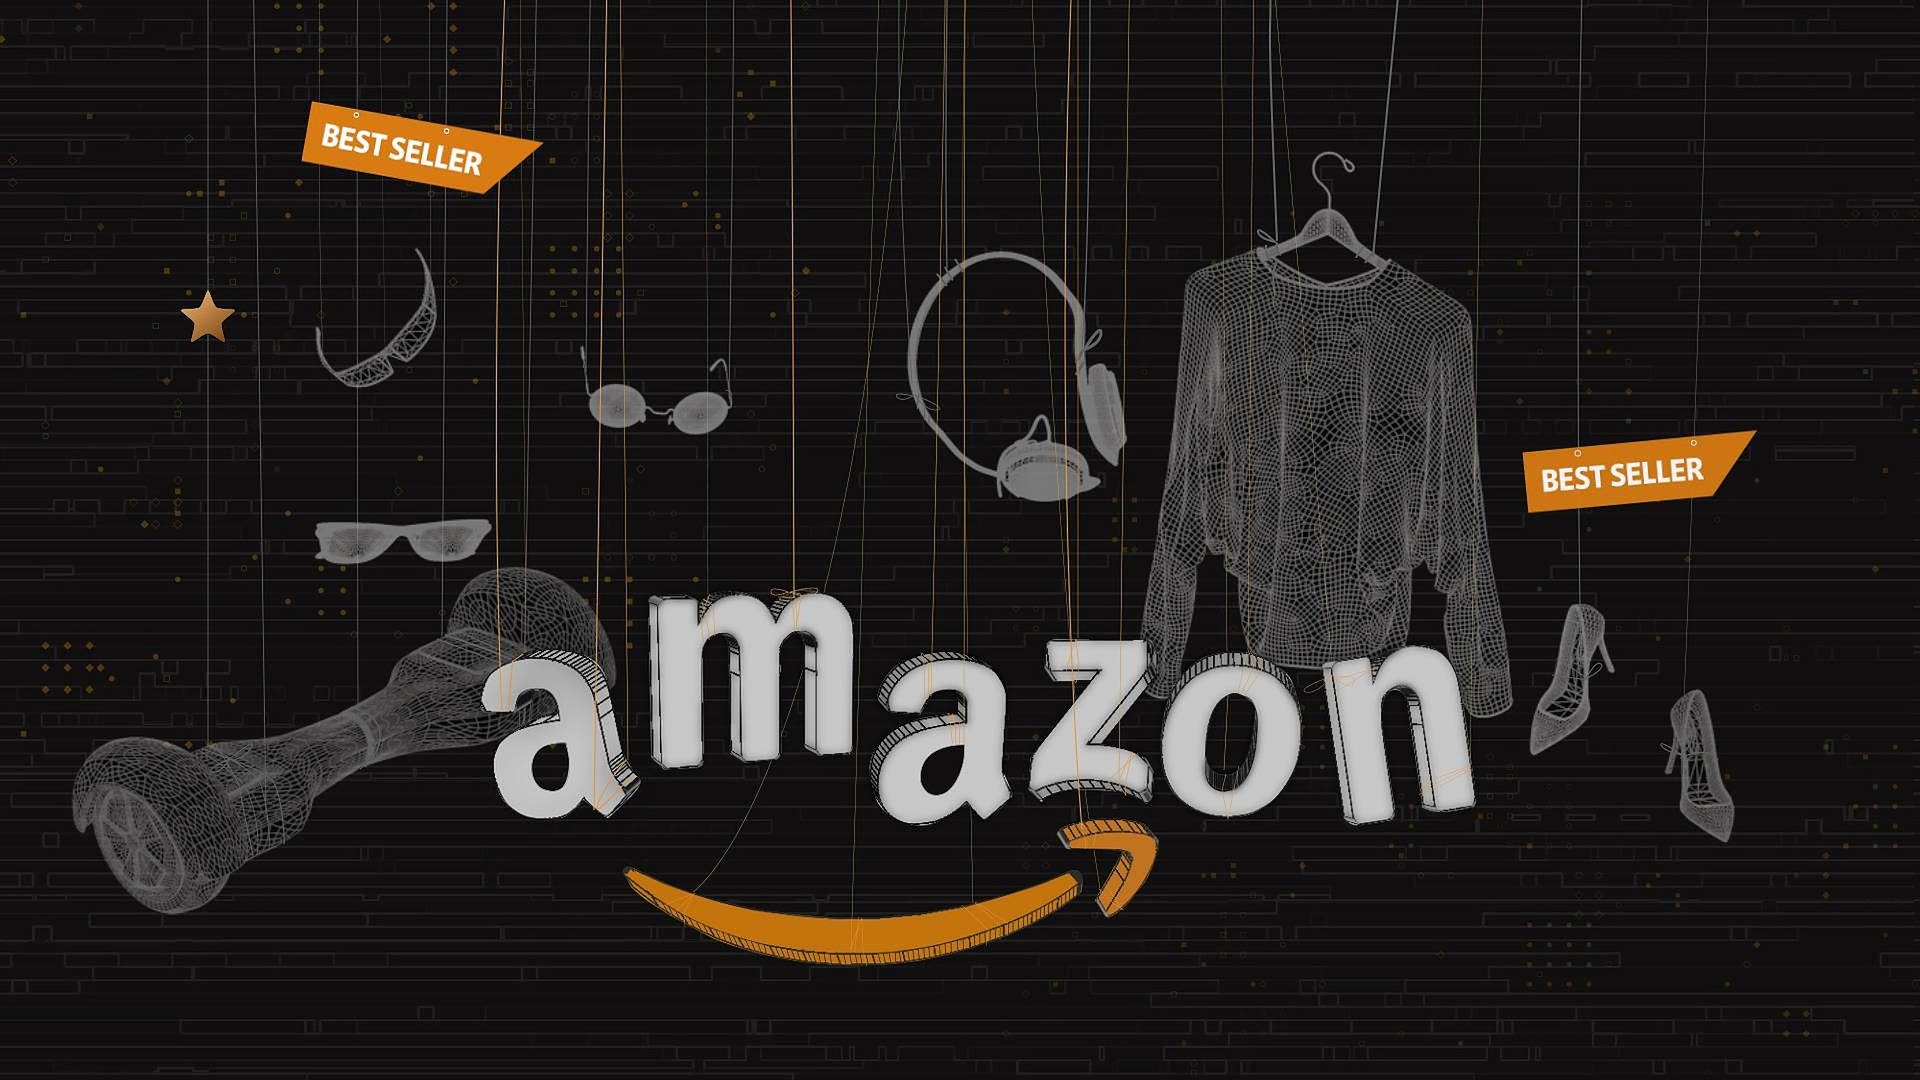 Amazon E-commerce Company Wallpaper